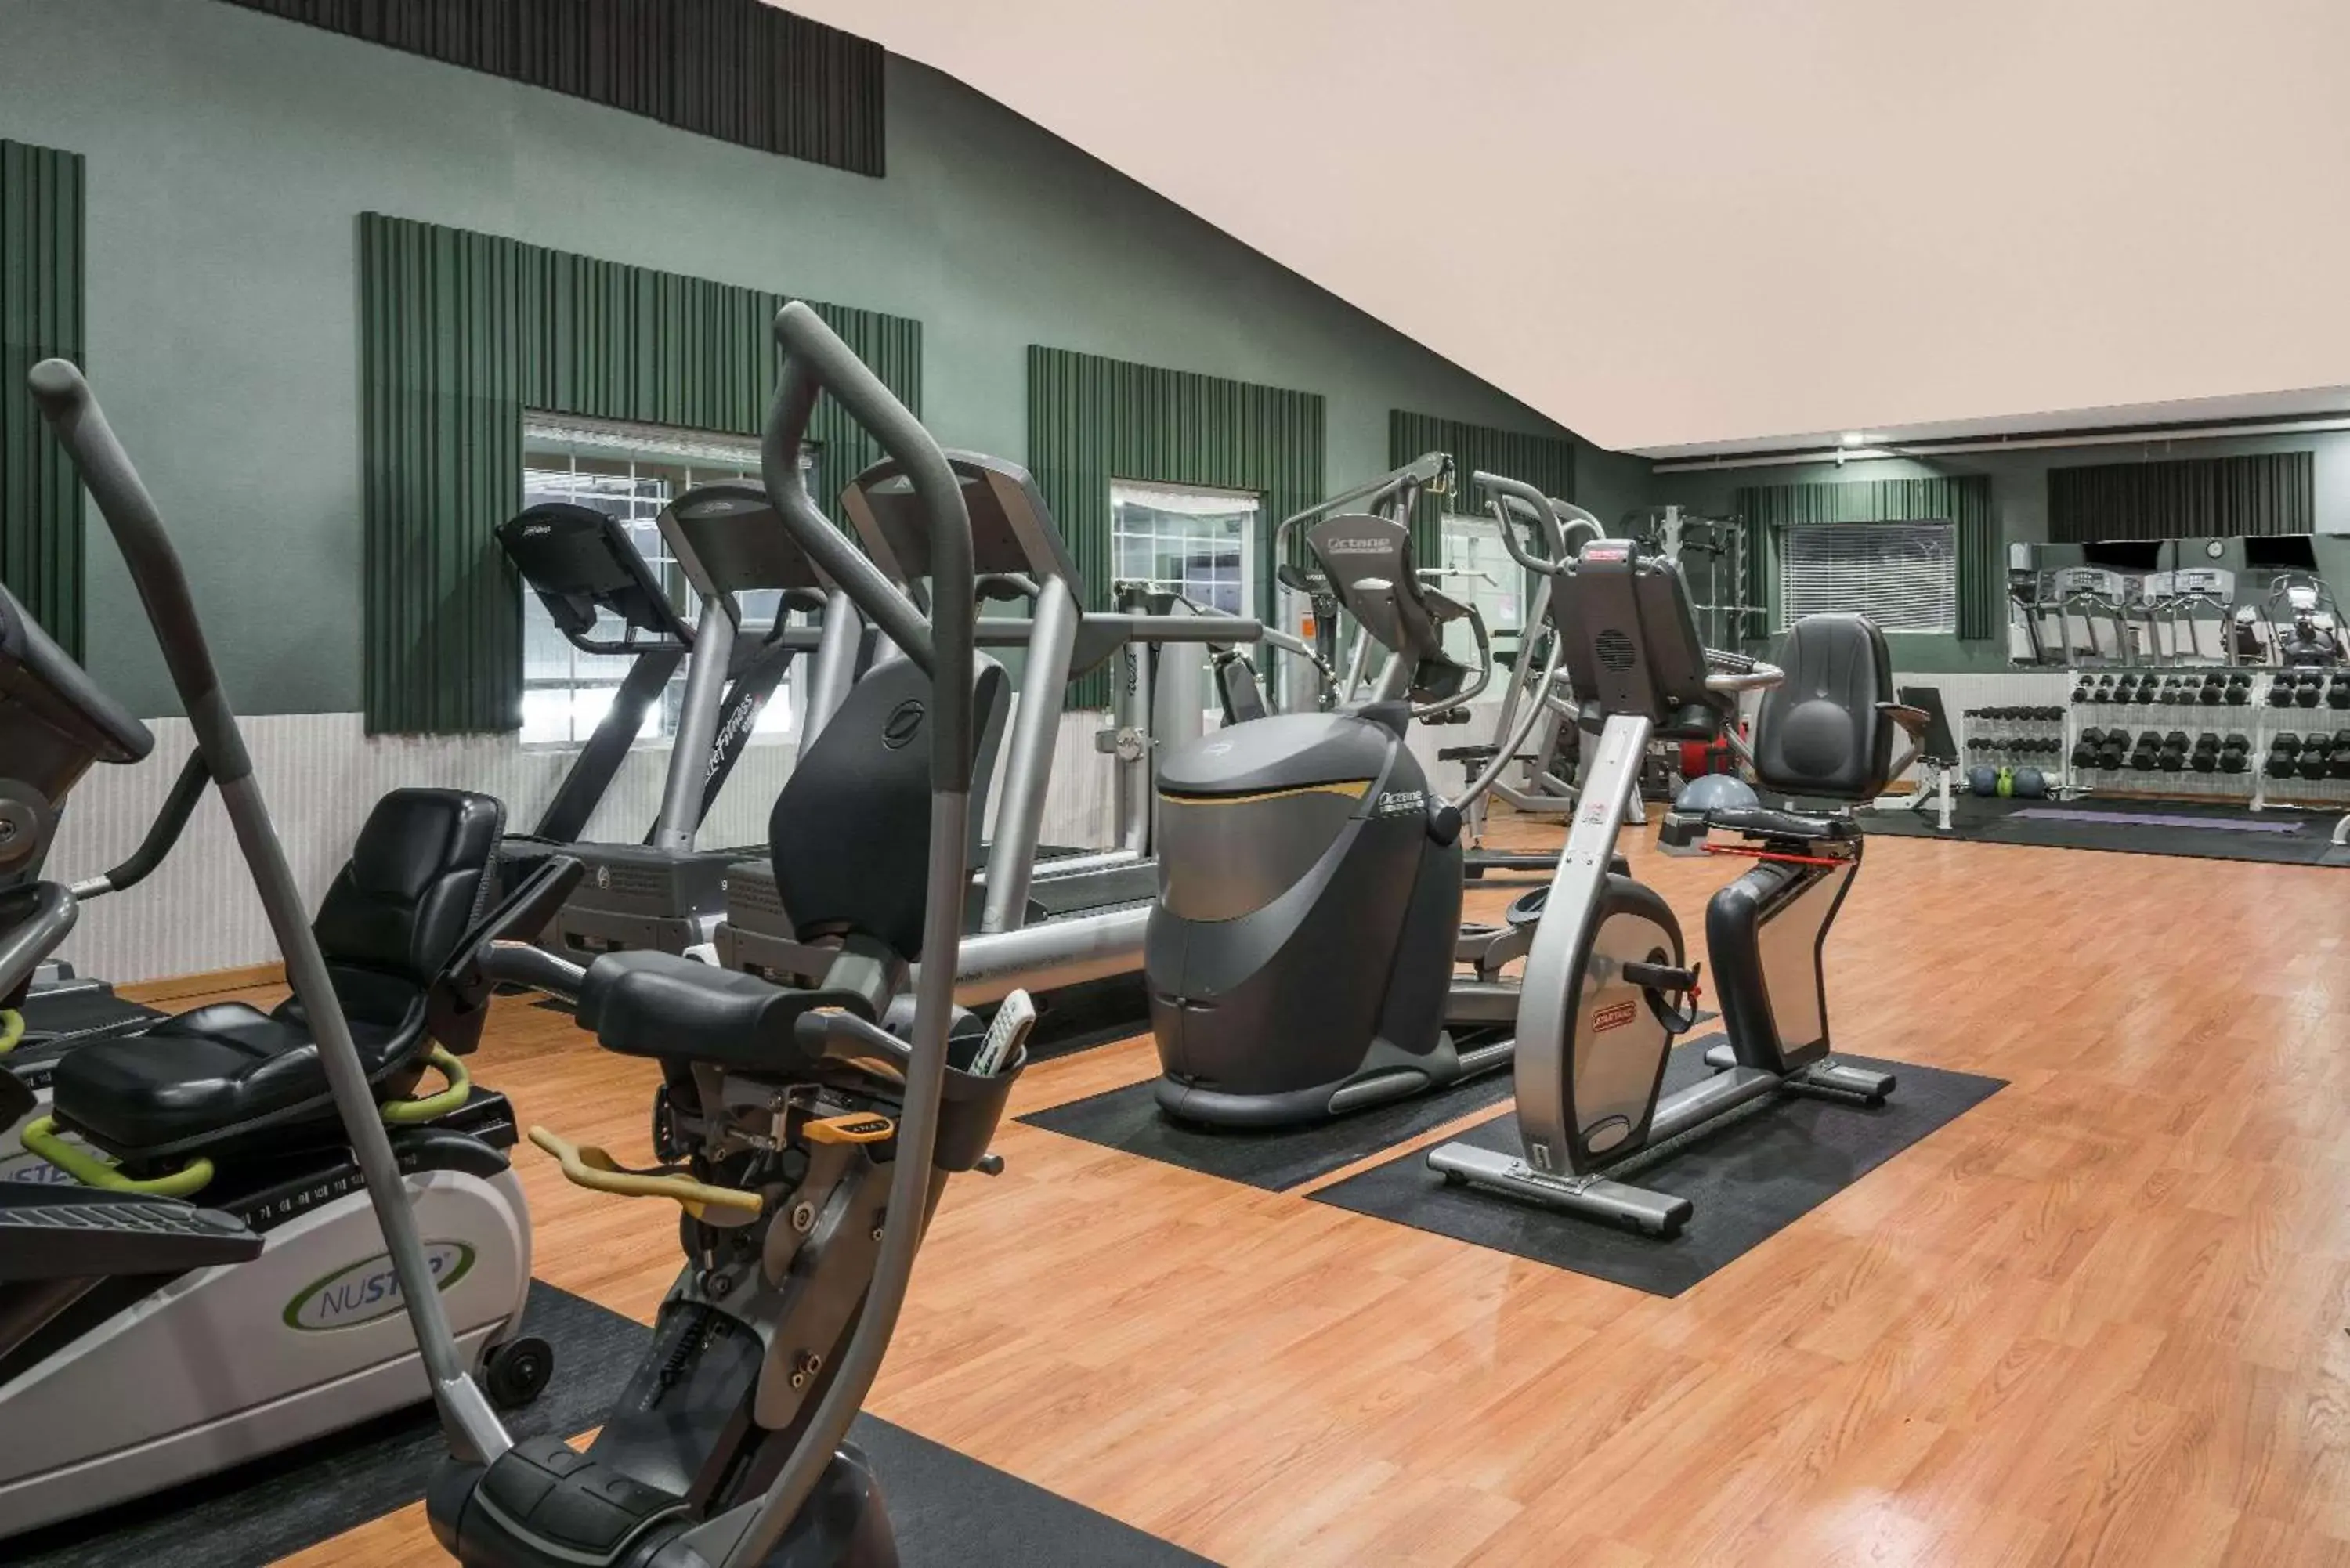 Fitness centre/facilities, Fitness Center/Facilities in Days Inn by Wyndham Fargo/Casselton